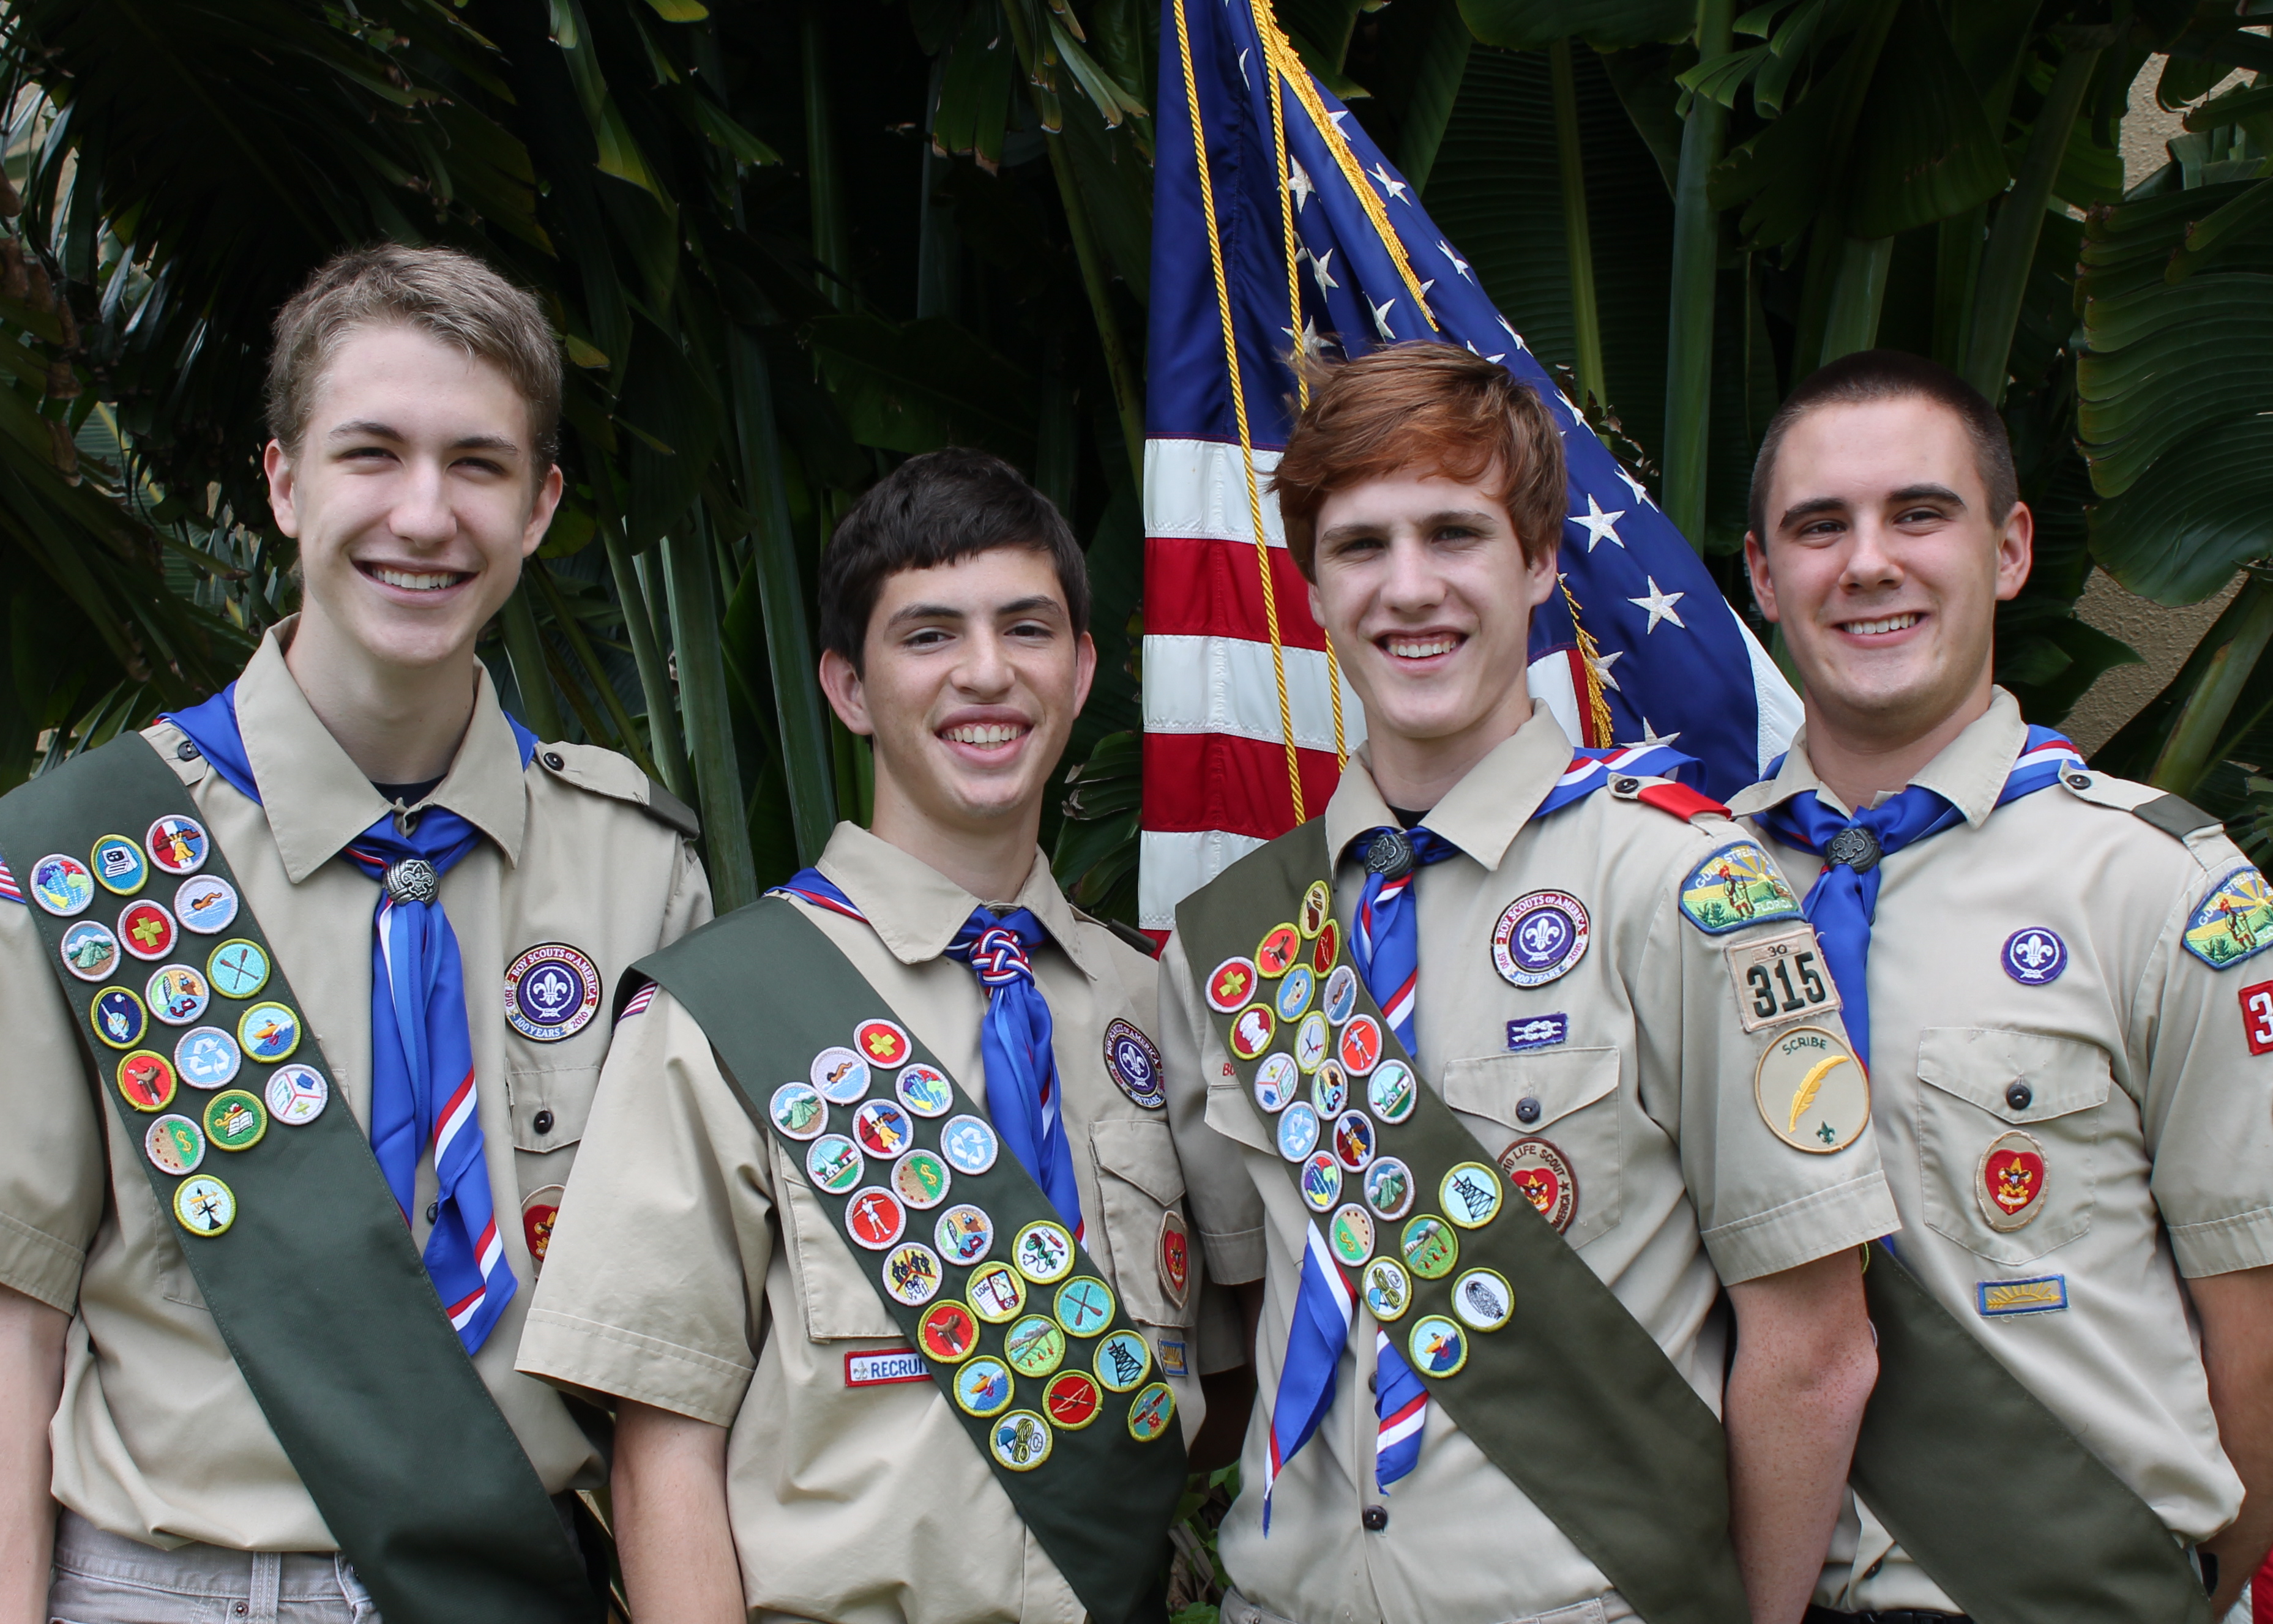 Boca Raton Eagle Scouts 2012